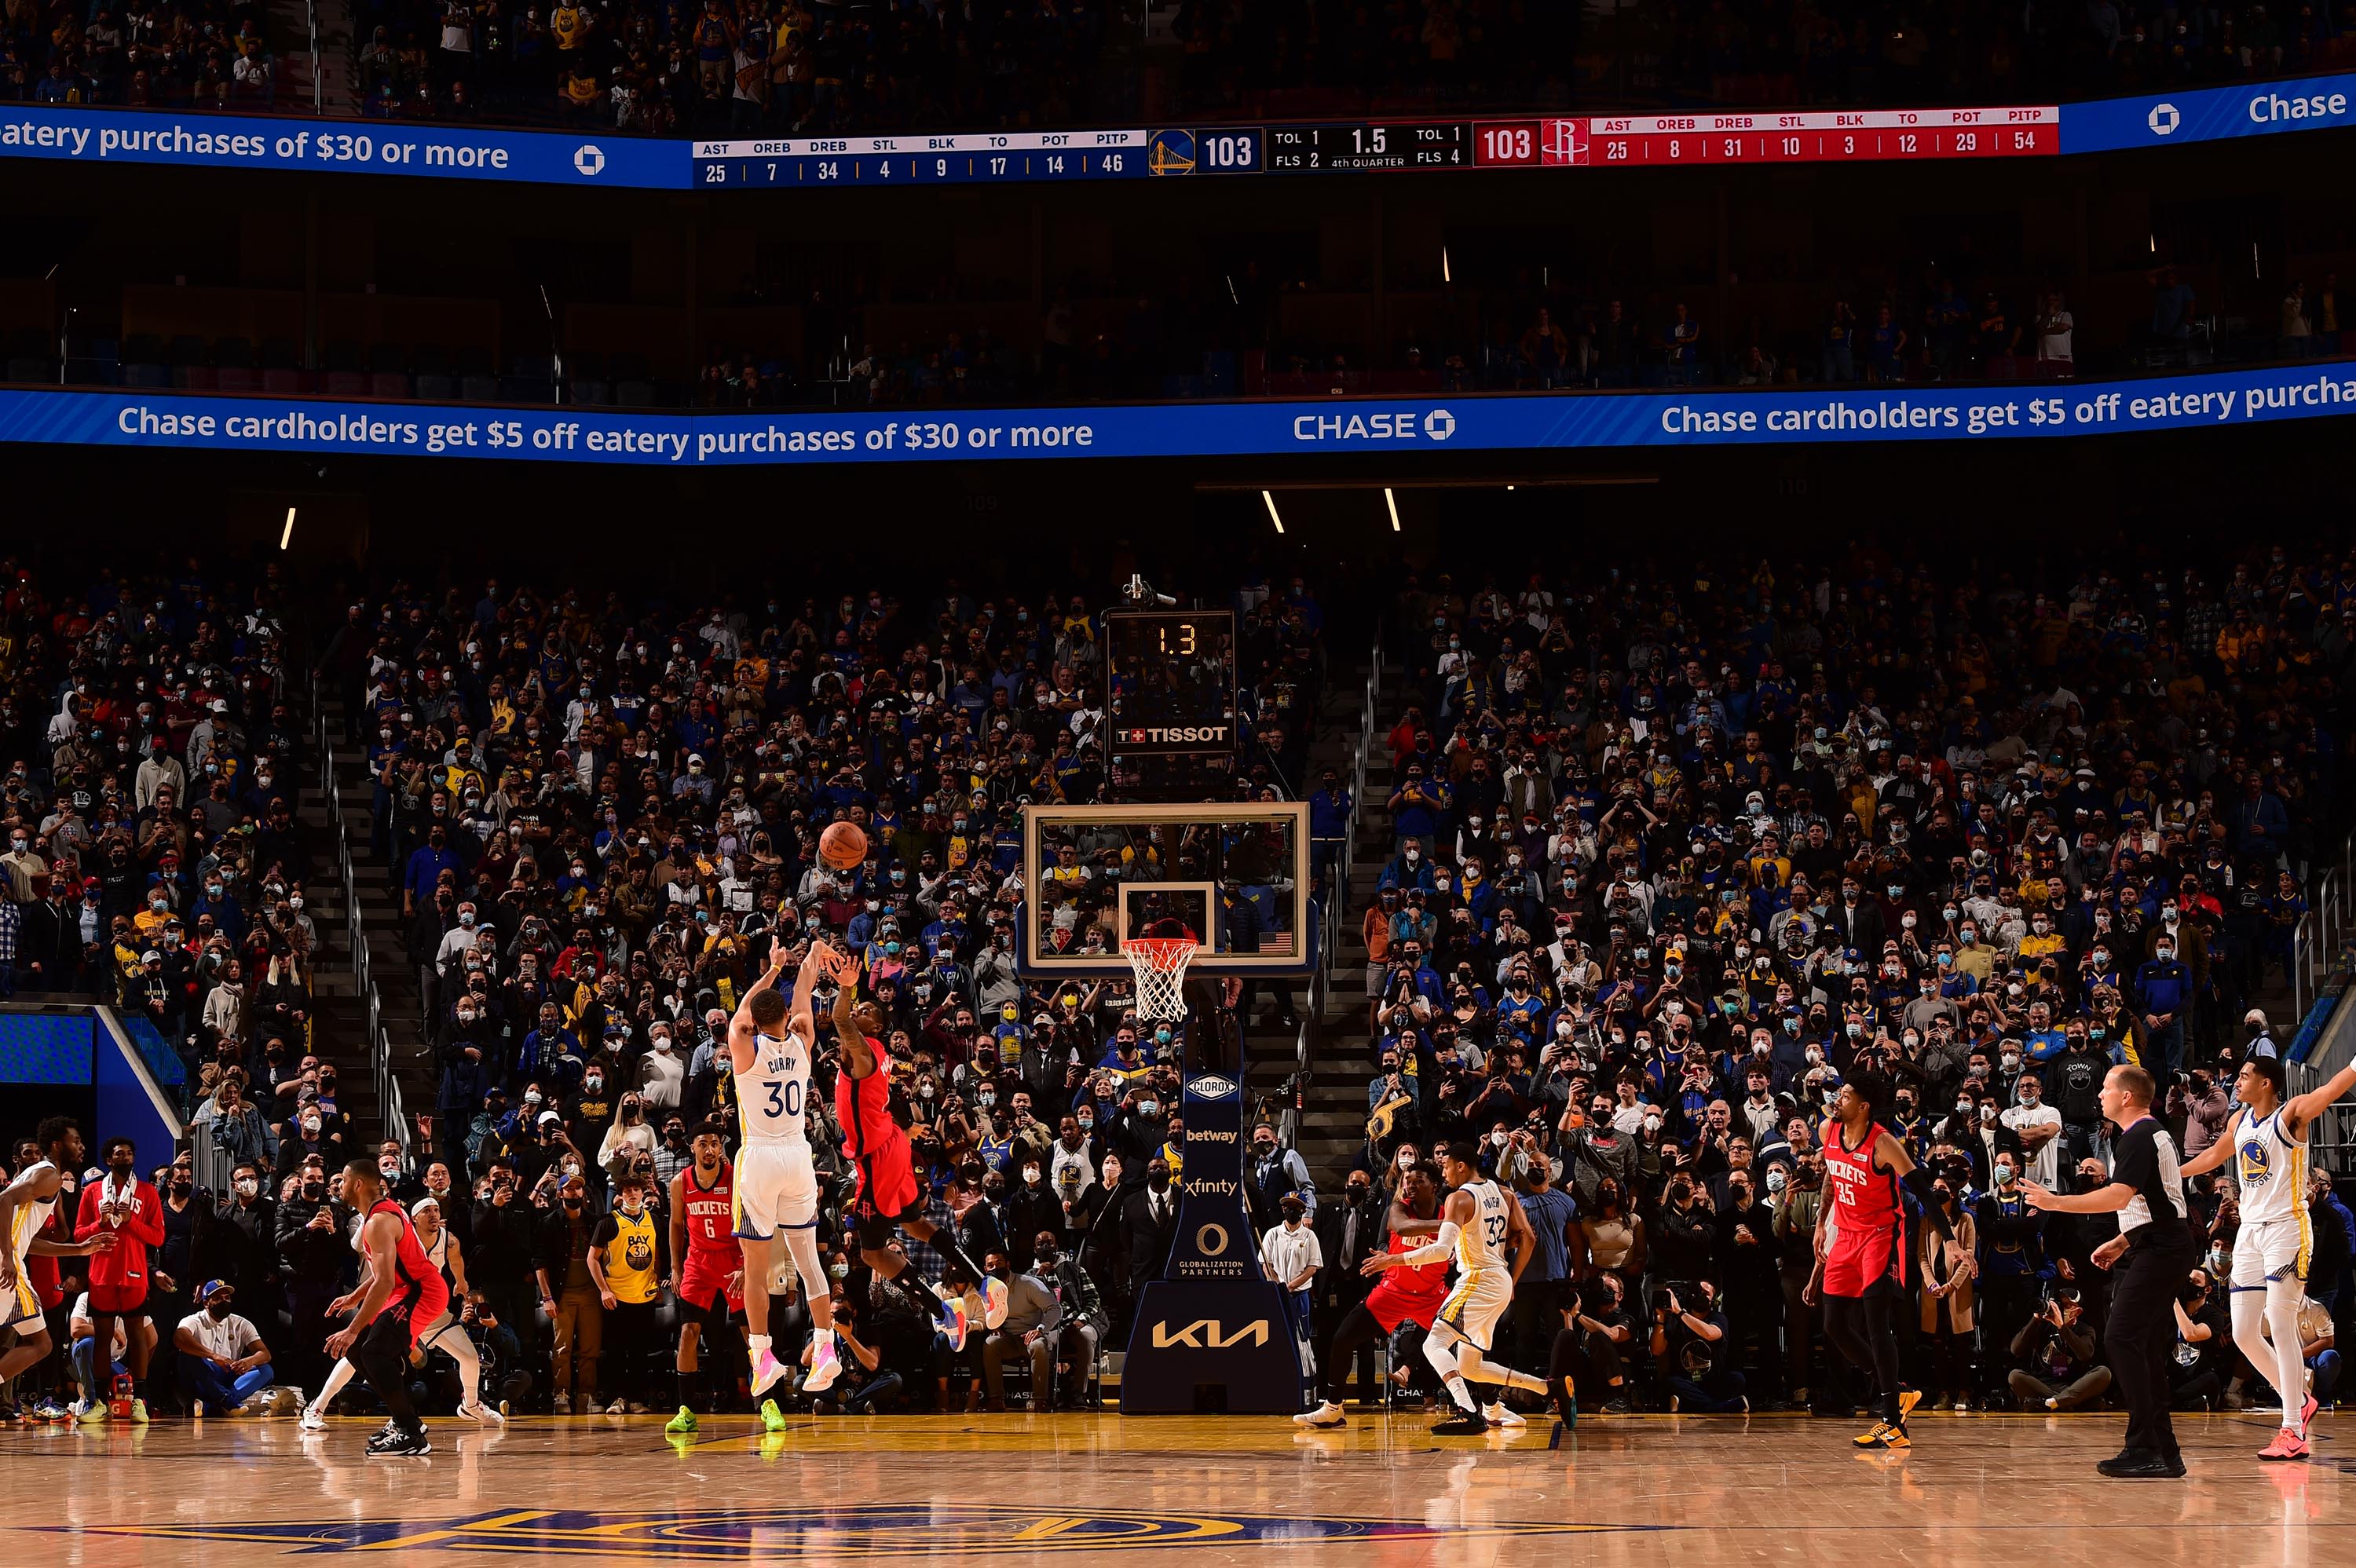 NBA highlights on Jan. 21: First game-winning buzzer-beater for Curry - CGTN